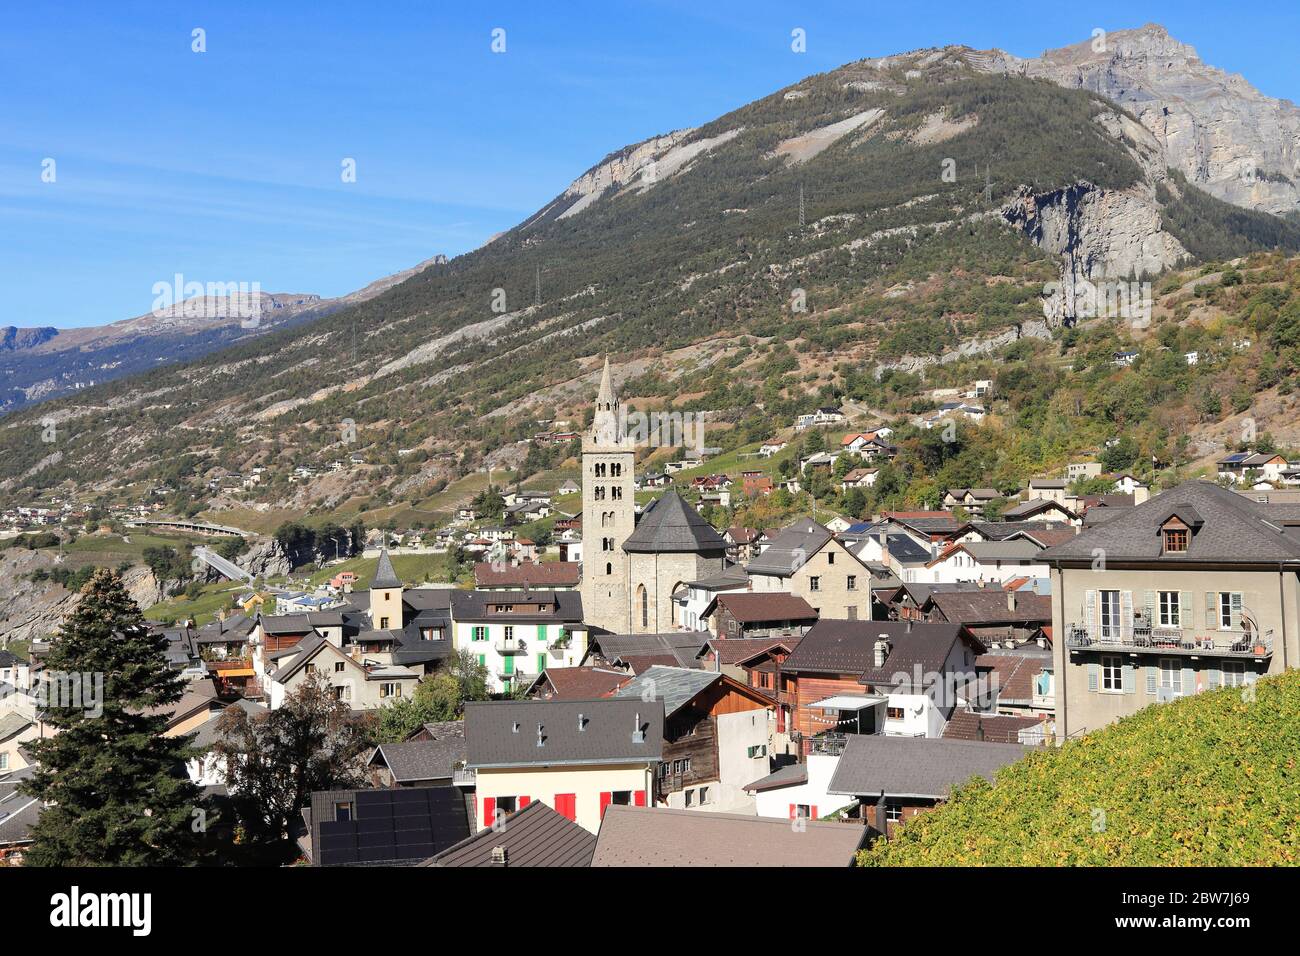 LEUK, VALAIS, SWITZERLAND - OCTOBER 12, 2018: The Swiss town of Leuk in the canton of Valais in Switzerland. Stock Photo